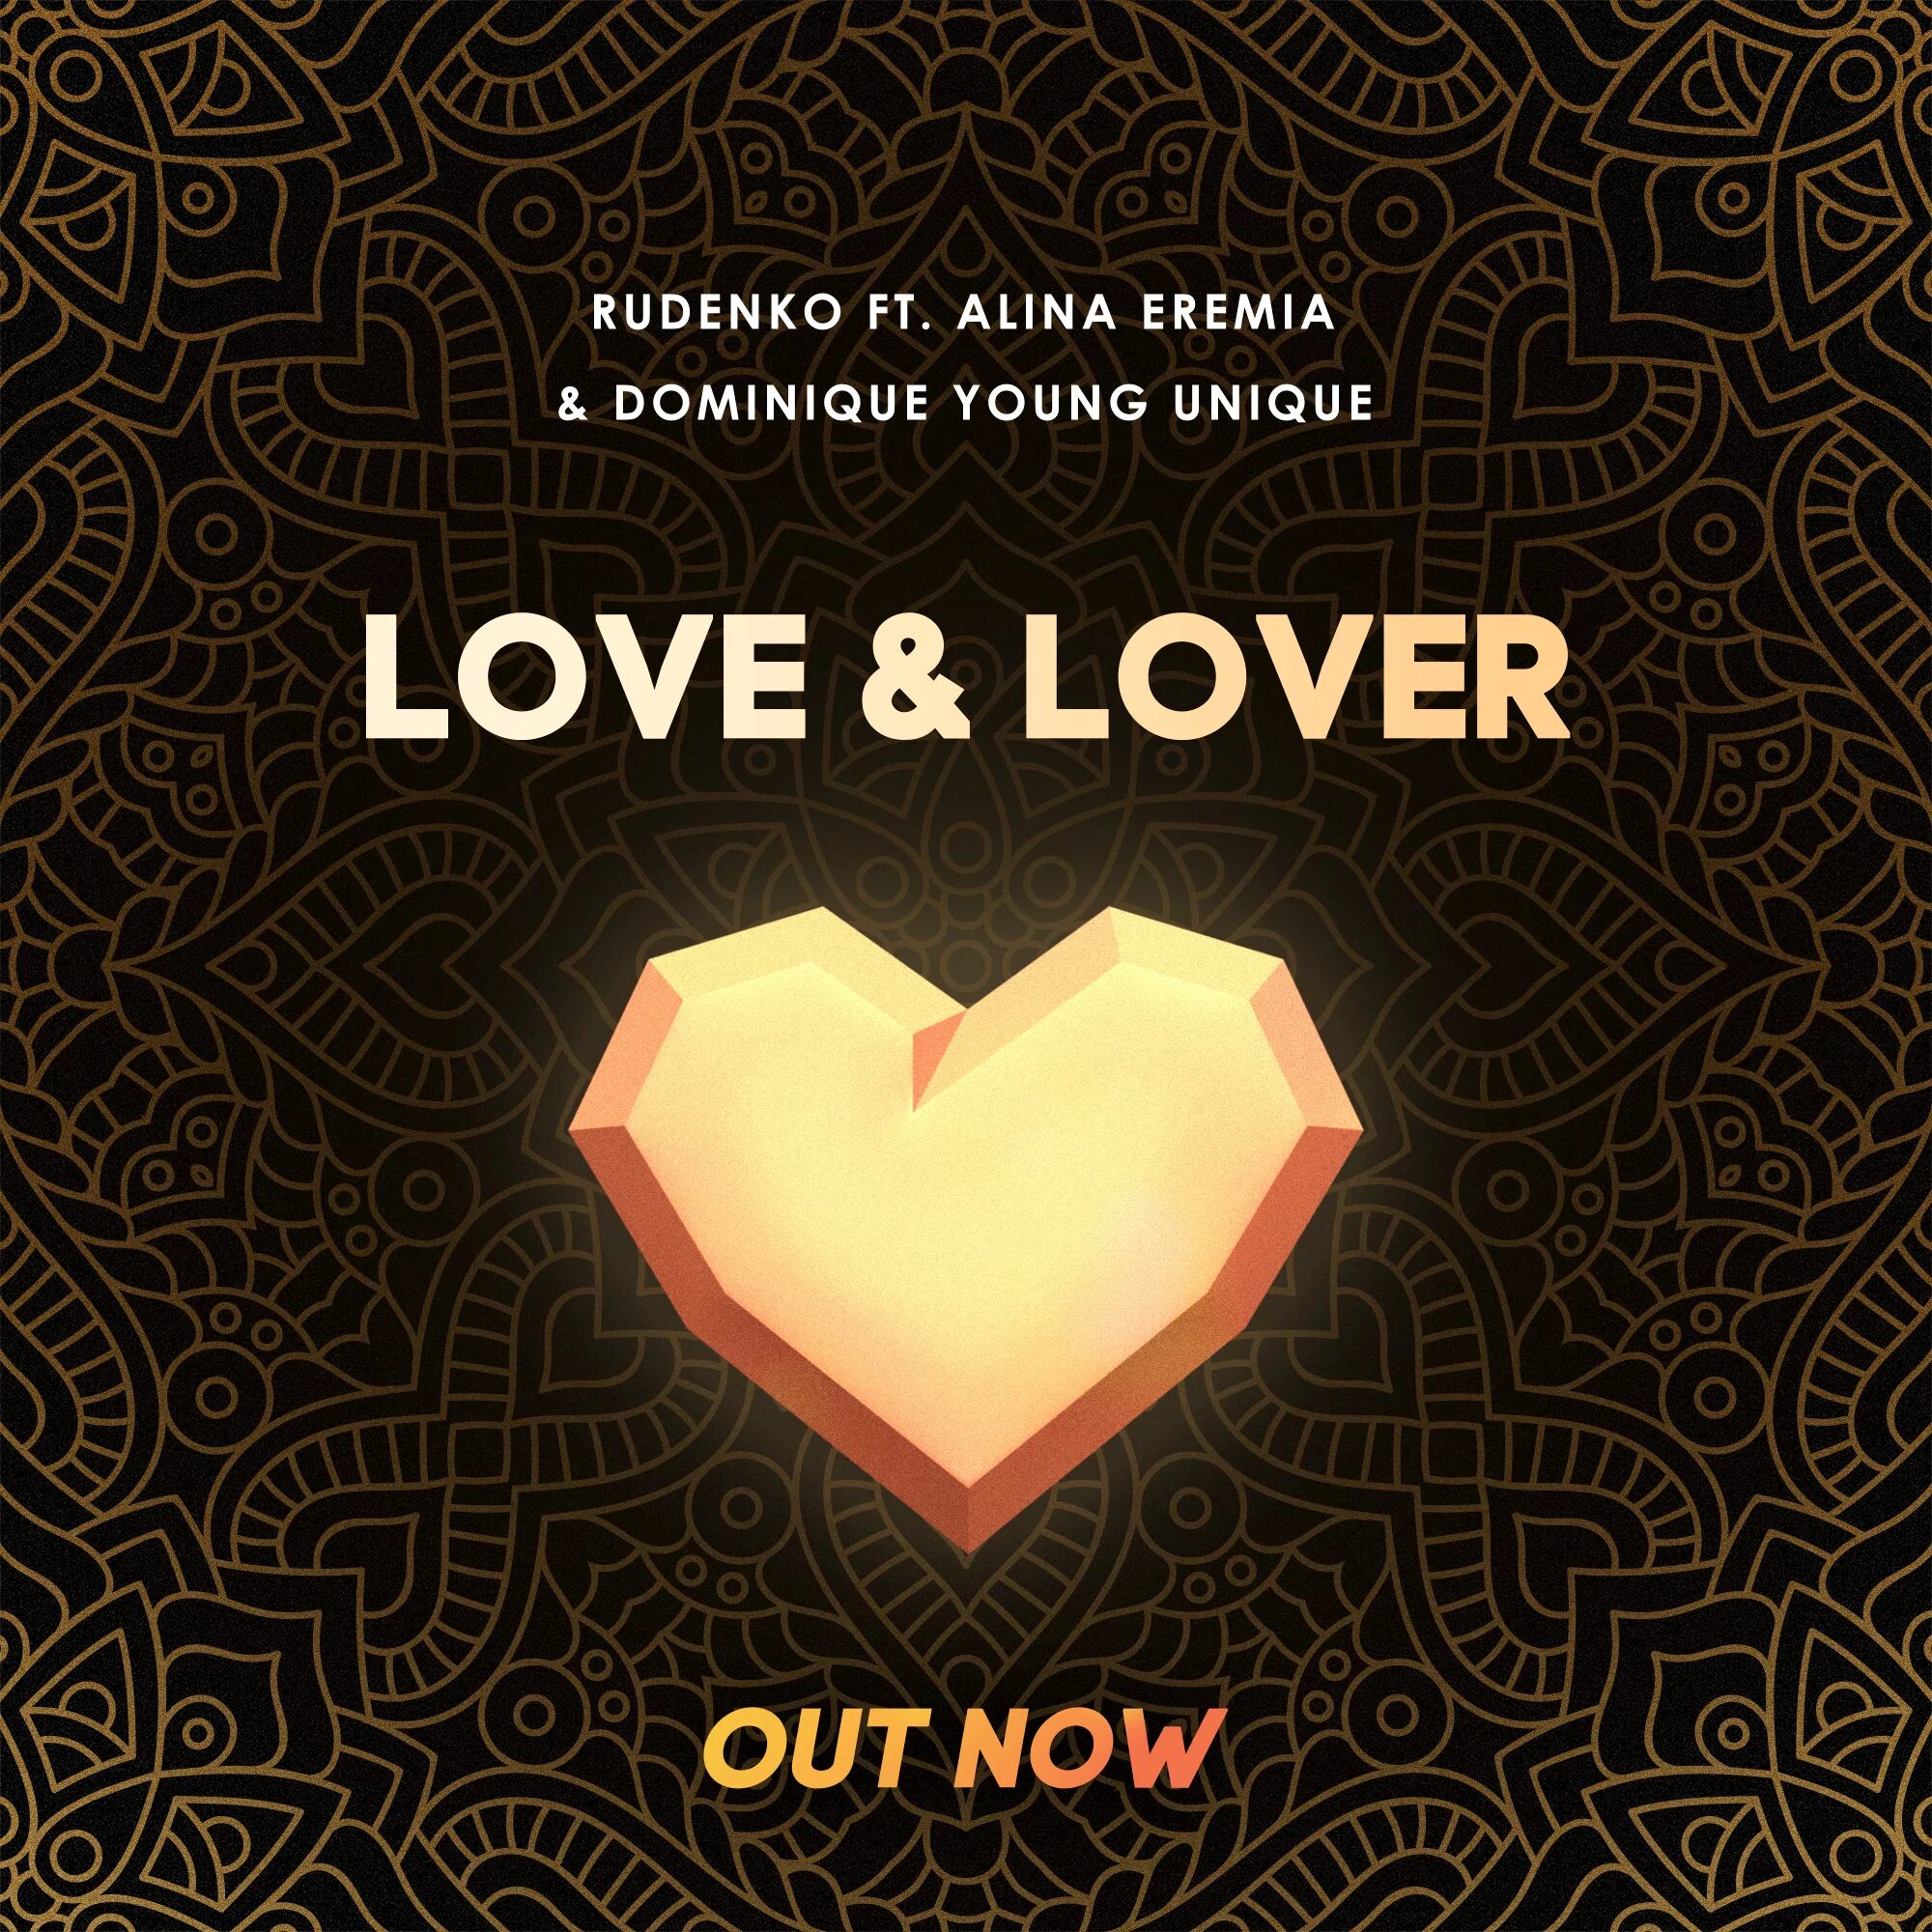 Лове ловер. Leonid Rudenko & Alina Eremia - Love lover. DJ Leonid Rudenko - Love and lover feat Alina Eremia and Dominique young unique.